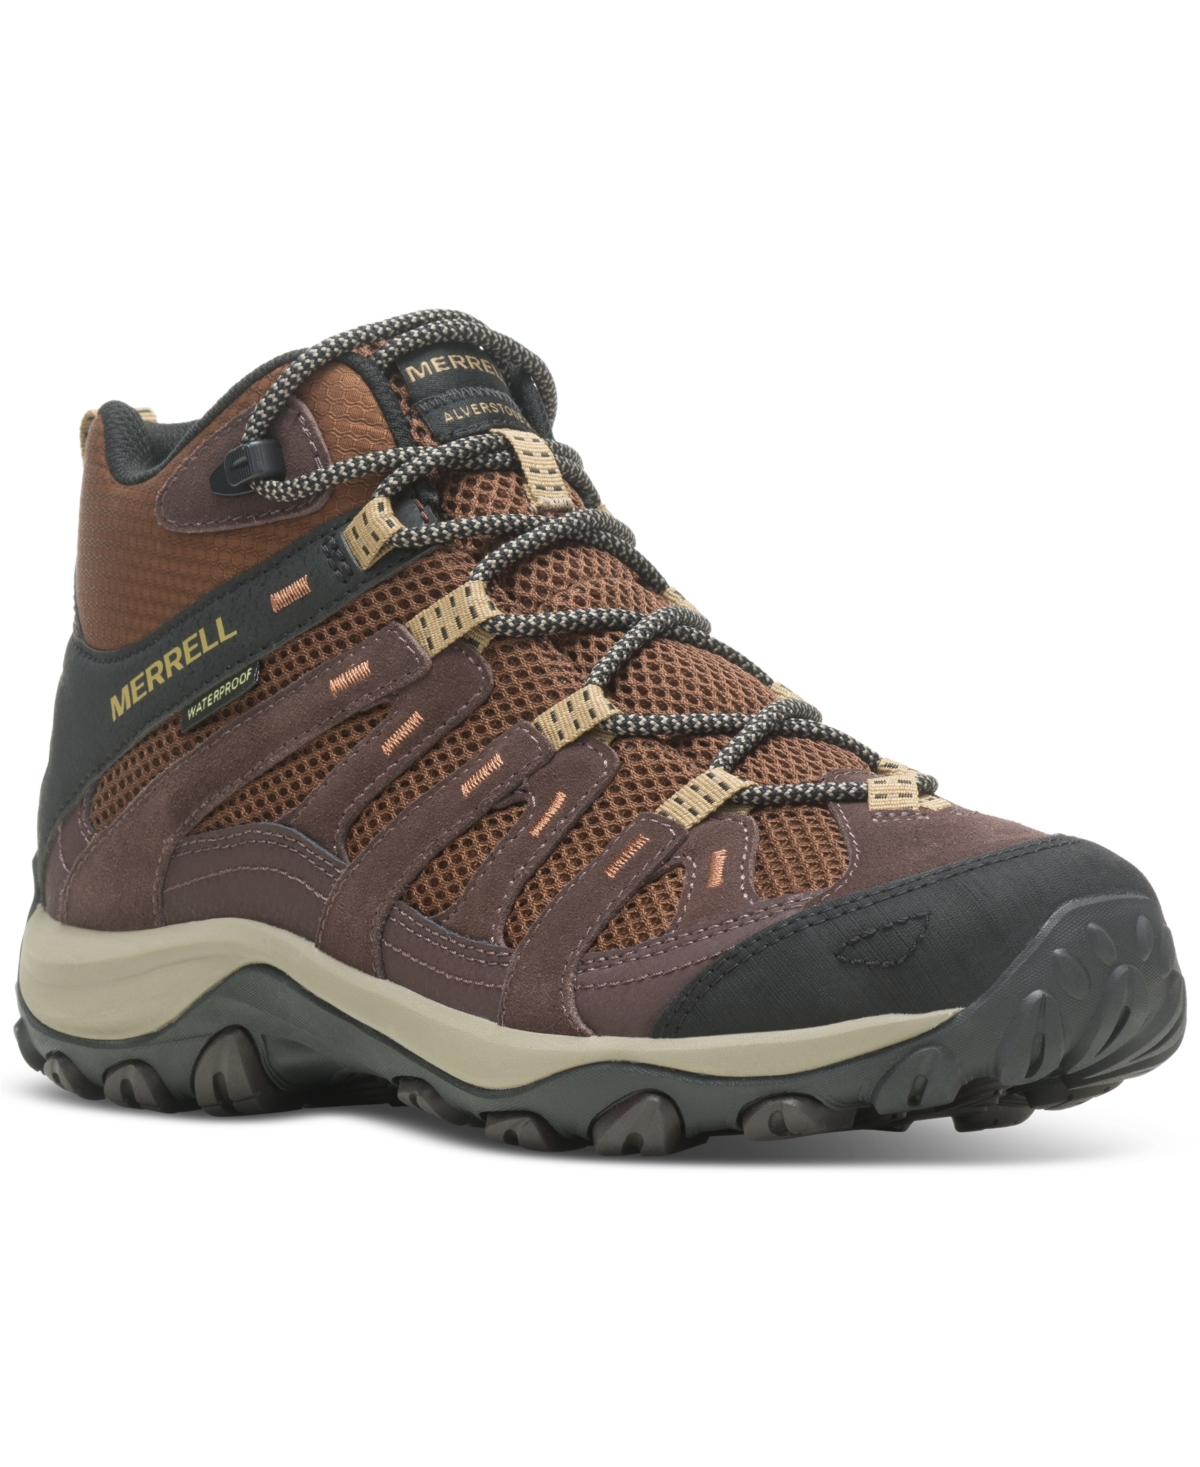 Men's Alverstone 2 Waterproof Hiking Boots - Earth/espresso